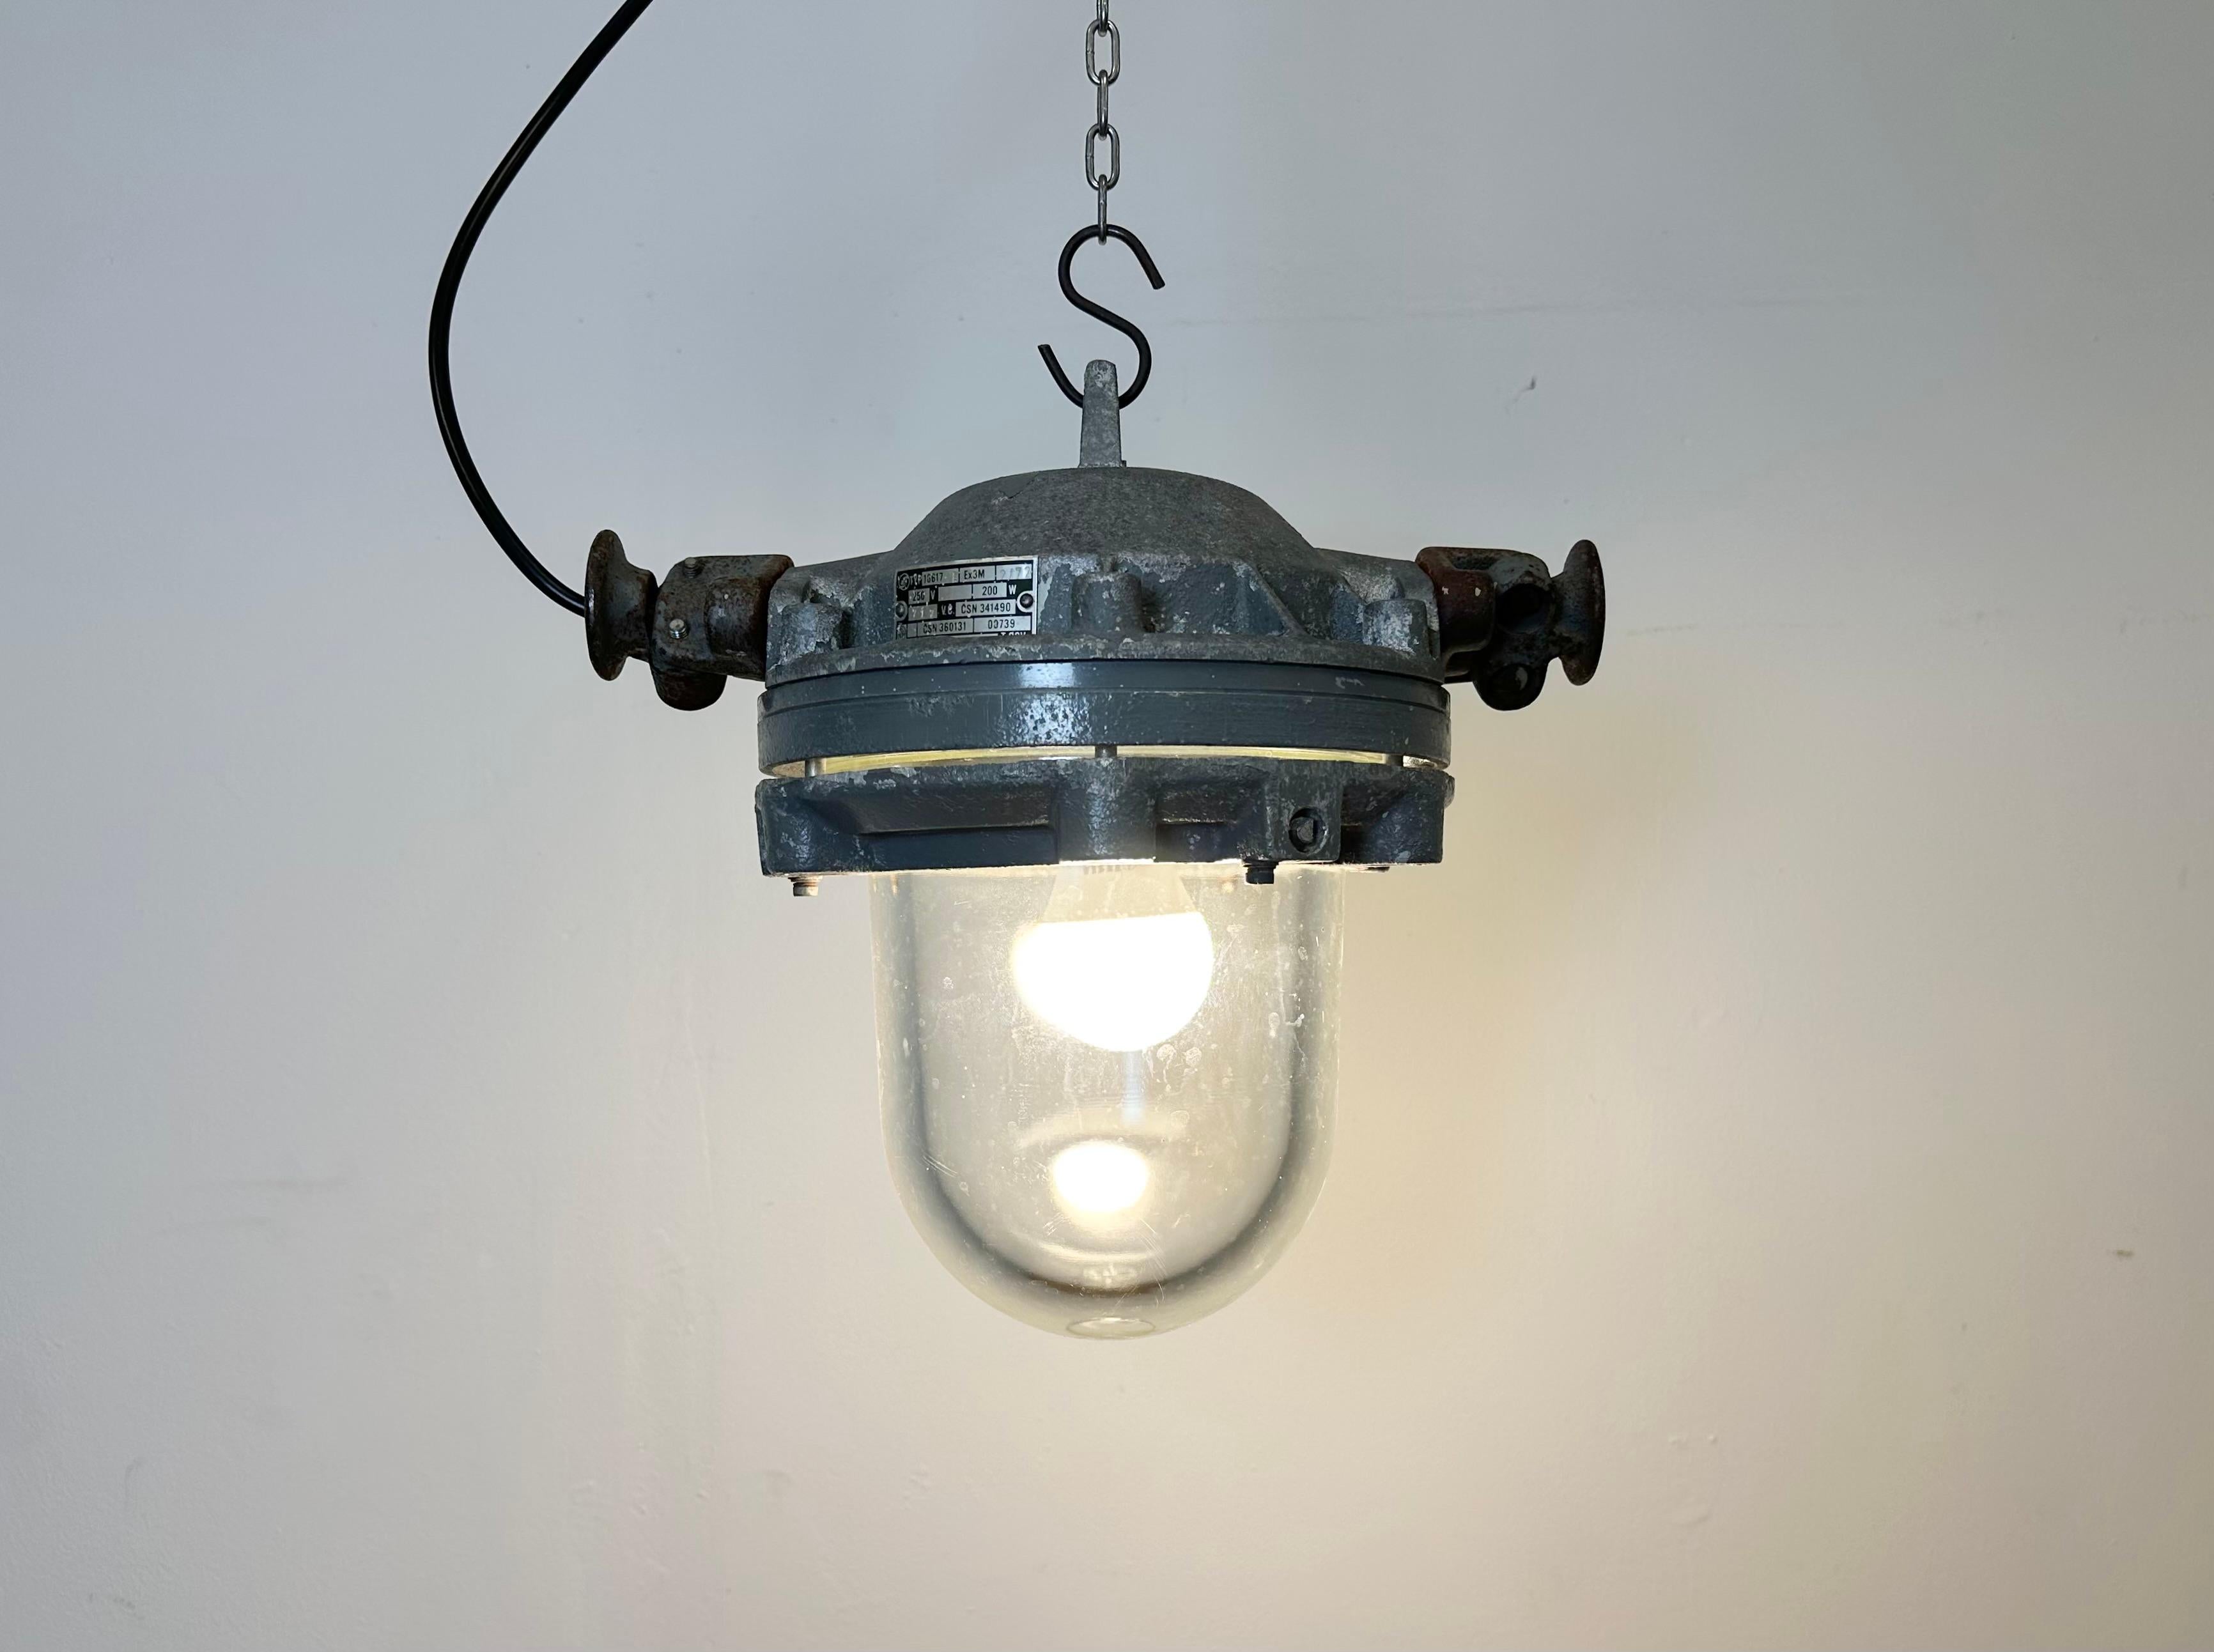 Dunkelgraue Explosion Proof-Lampe aus Aluminiumguss, 1970er Jahre im Angebot 10